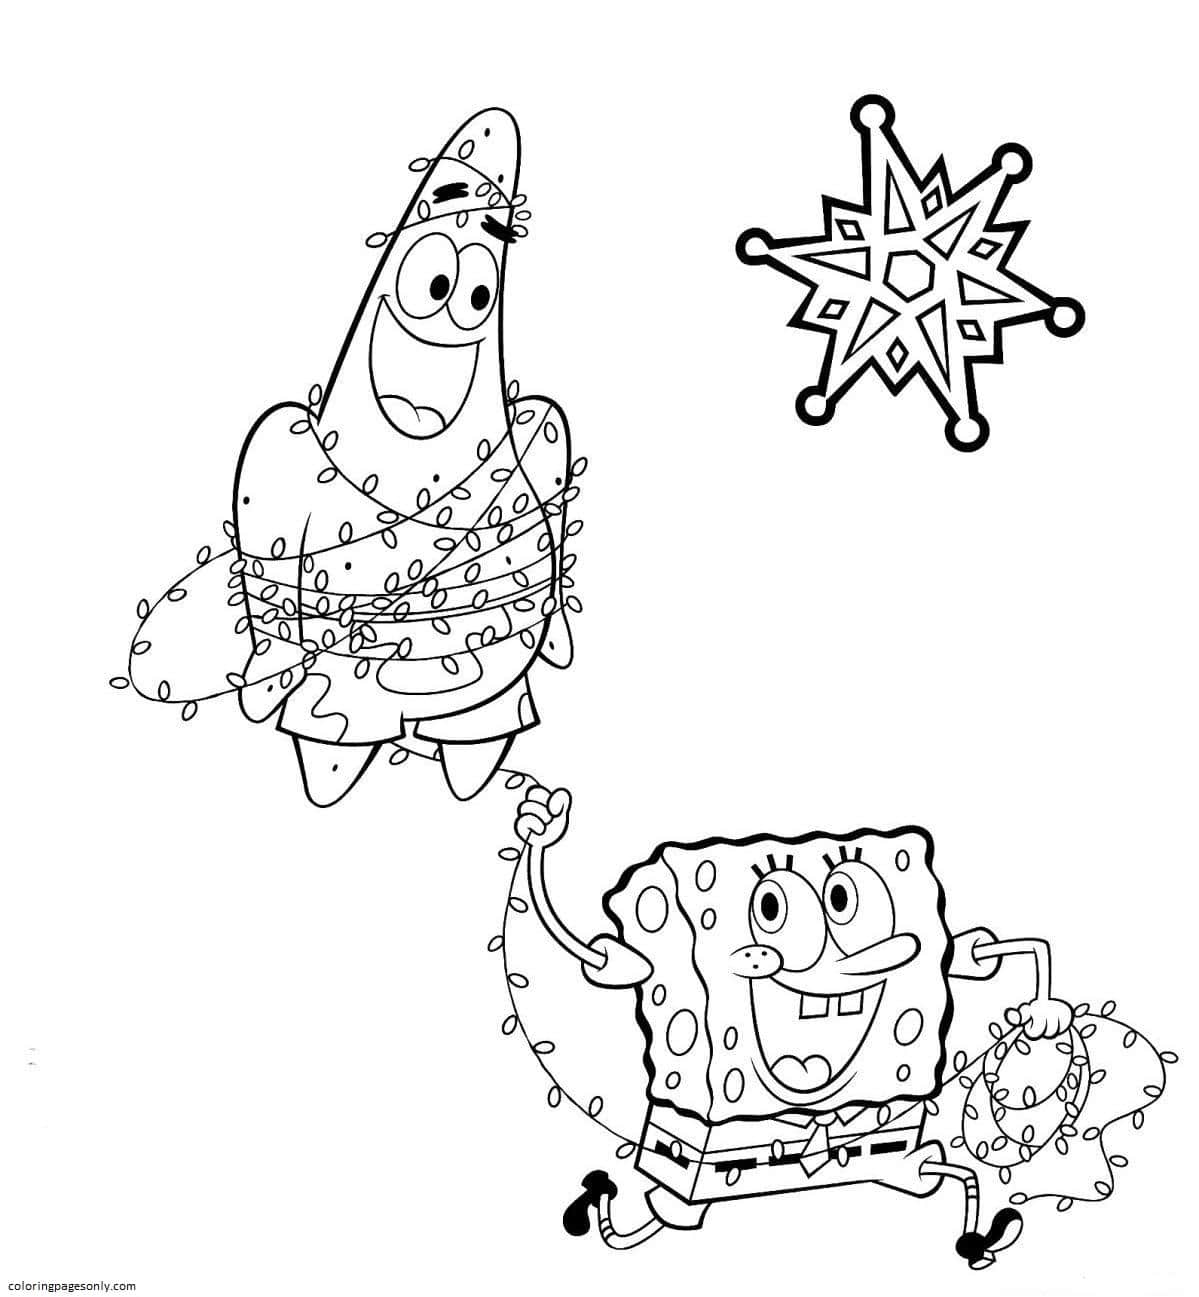 Patrick And Spongebob X-mas Coloring Pages